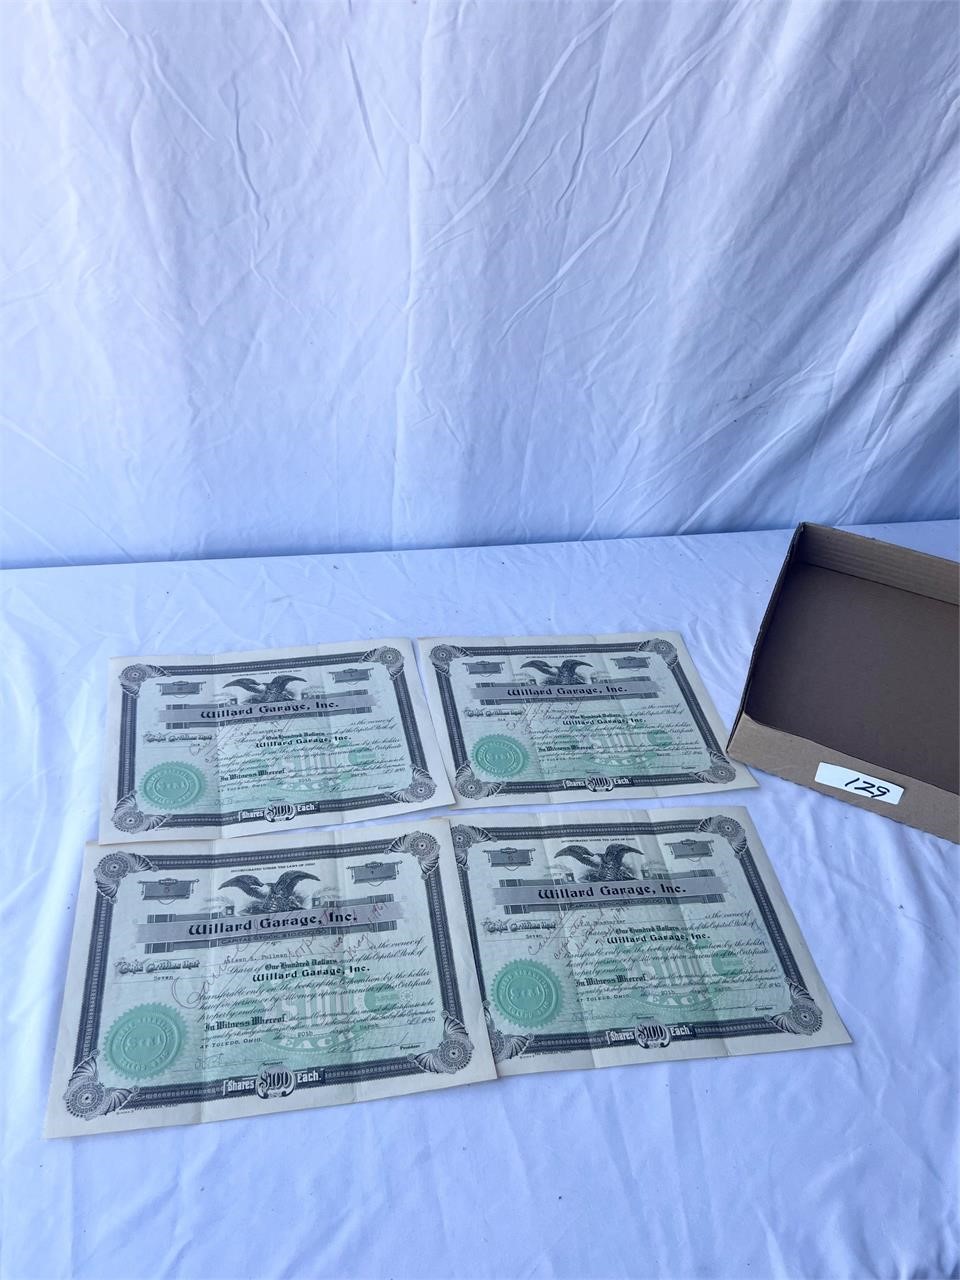 4 Willard Garage Toledo Stock Certificates